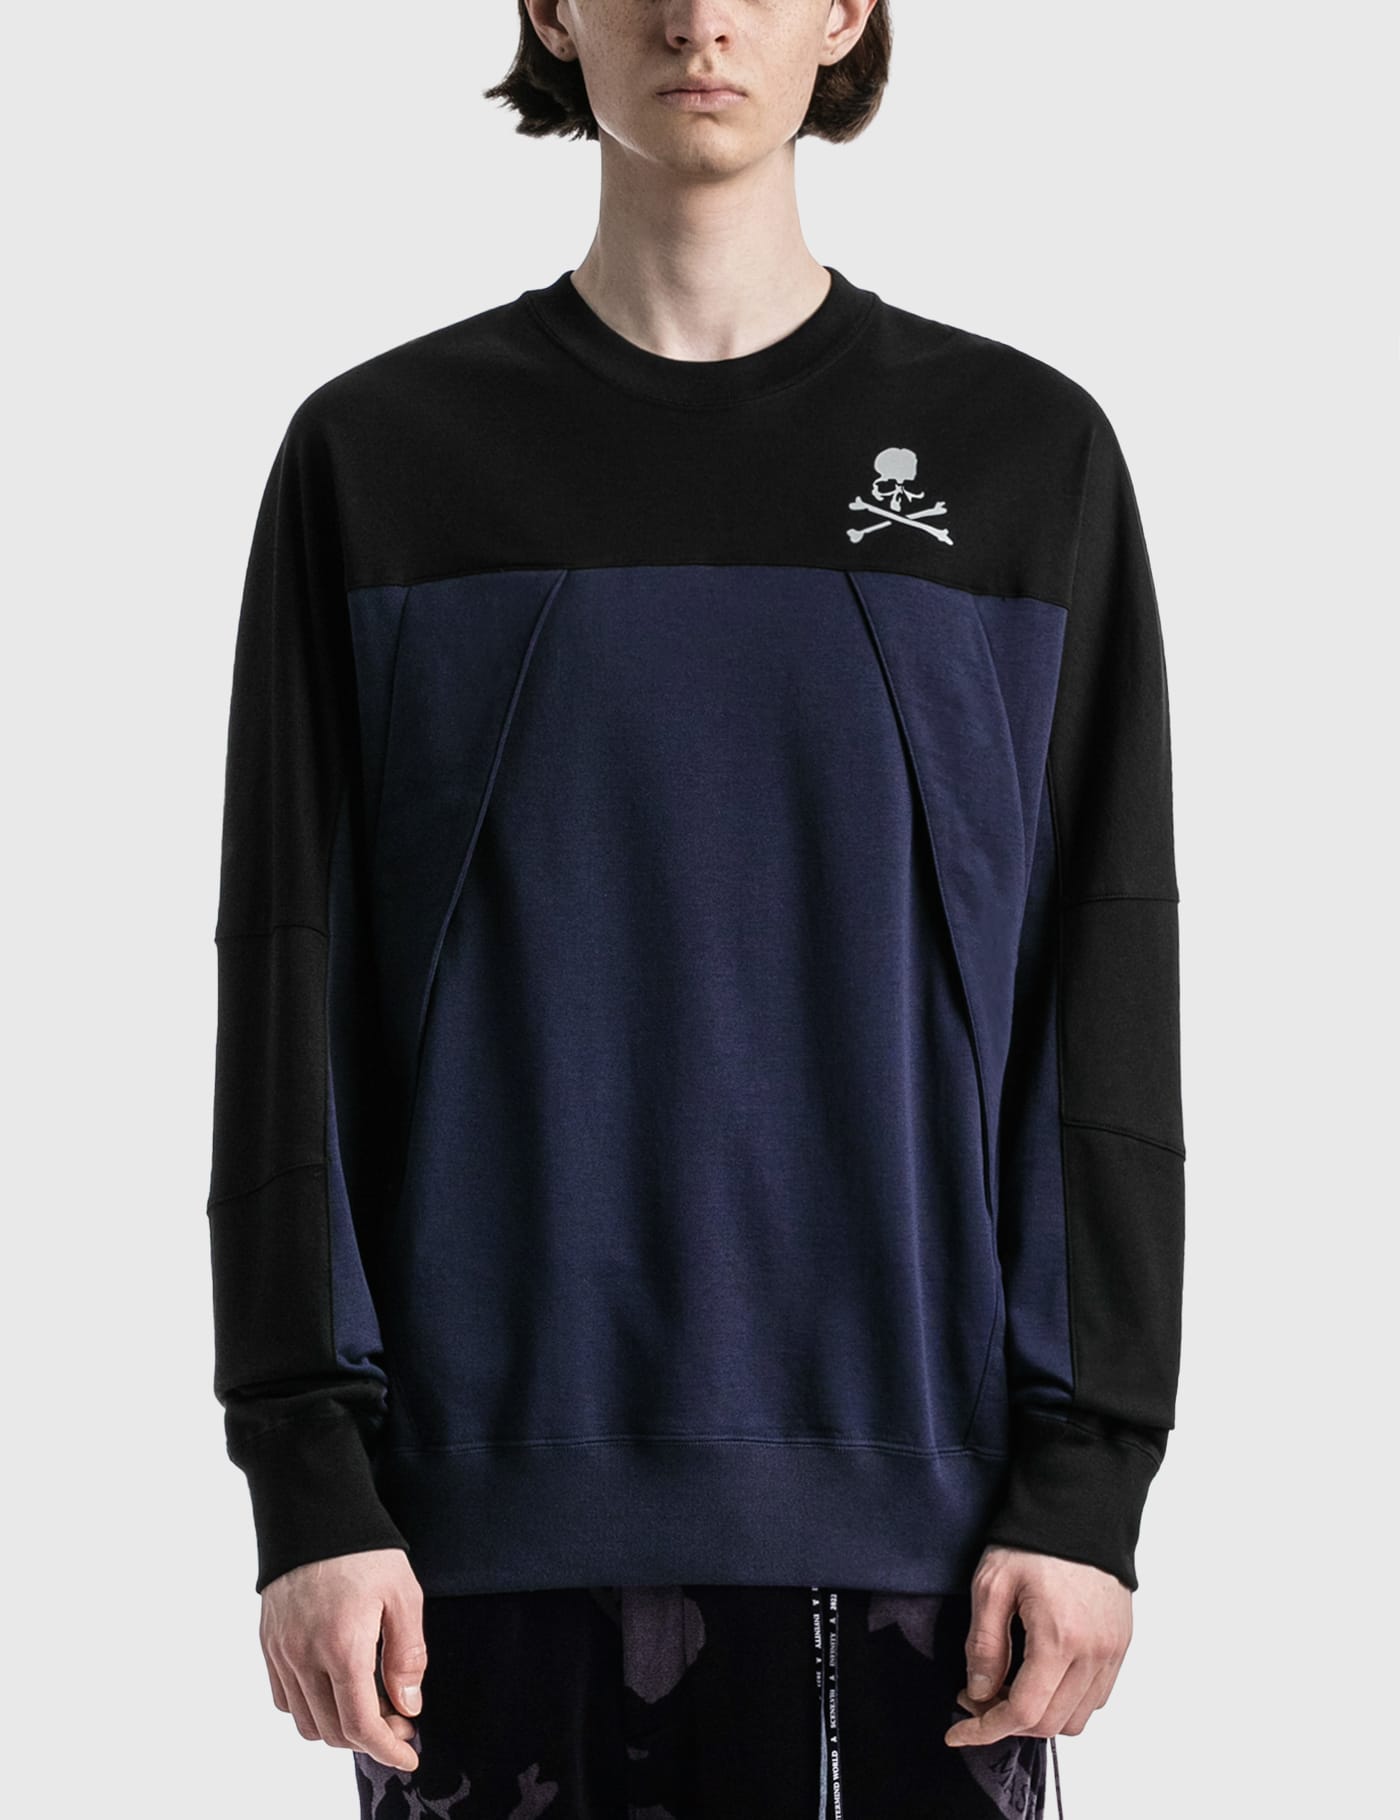 Ader Error - Admore Sweatshirt | HBX - Globally Curated Fashion ...